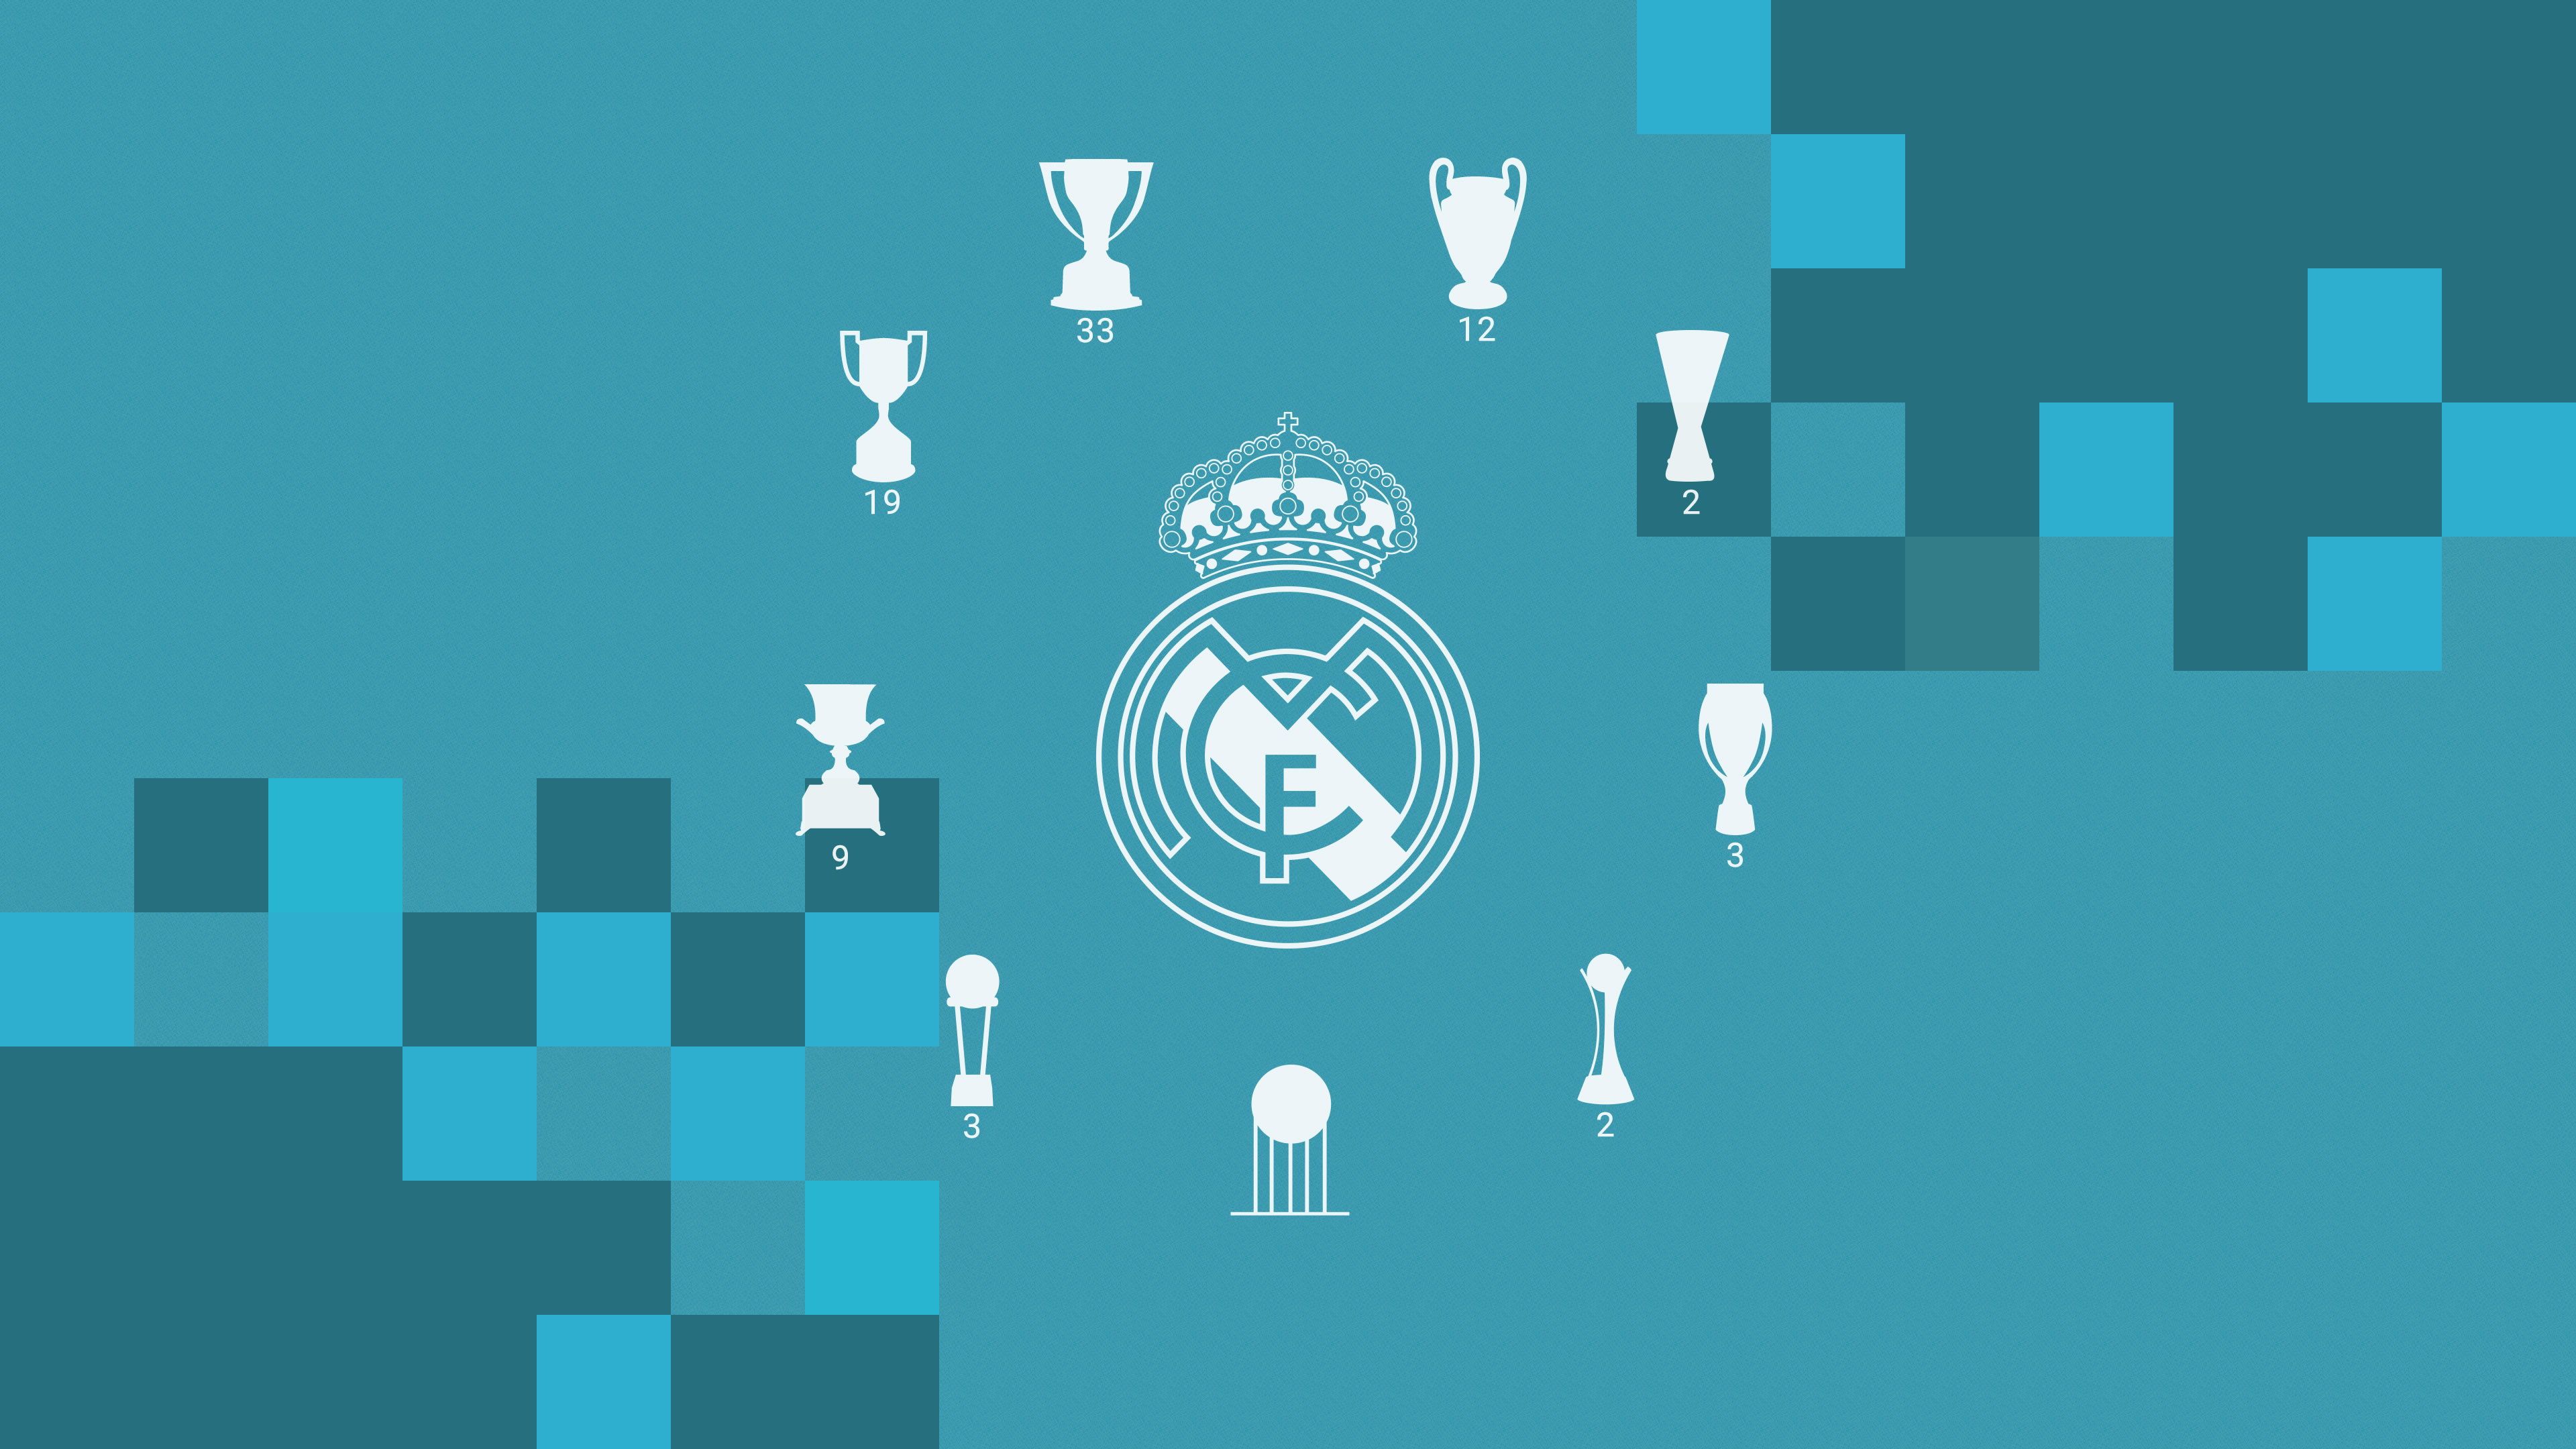 Real Madrid HD Wallpaper Image